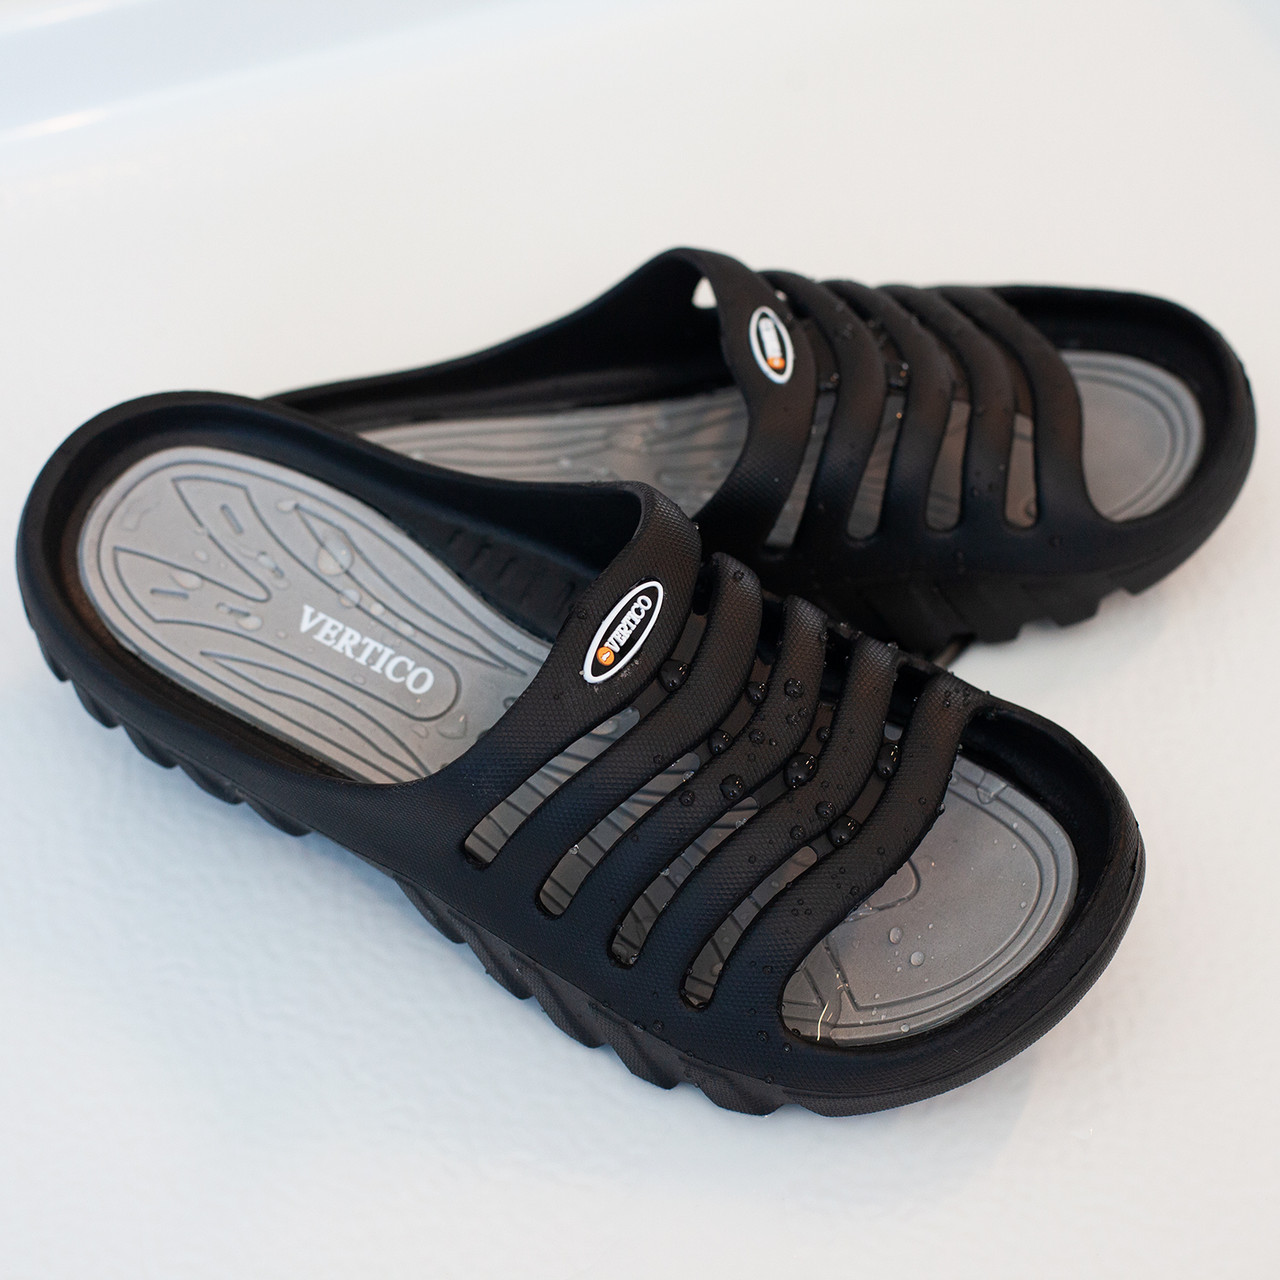 vertico shower and poolside sport sandal